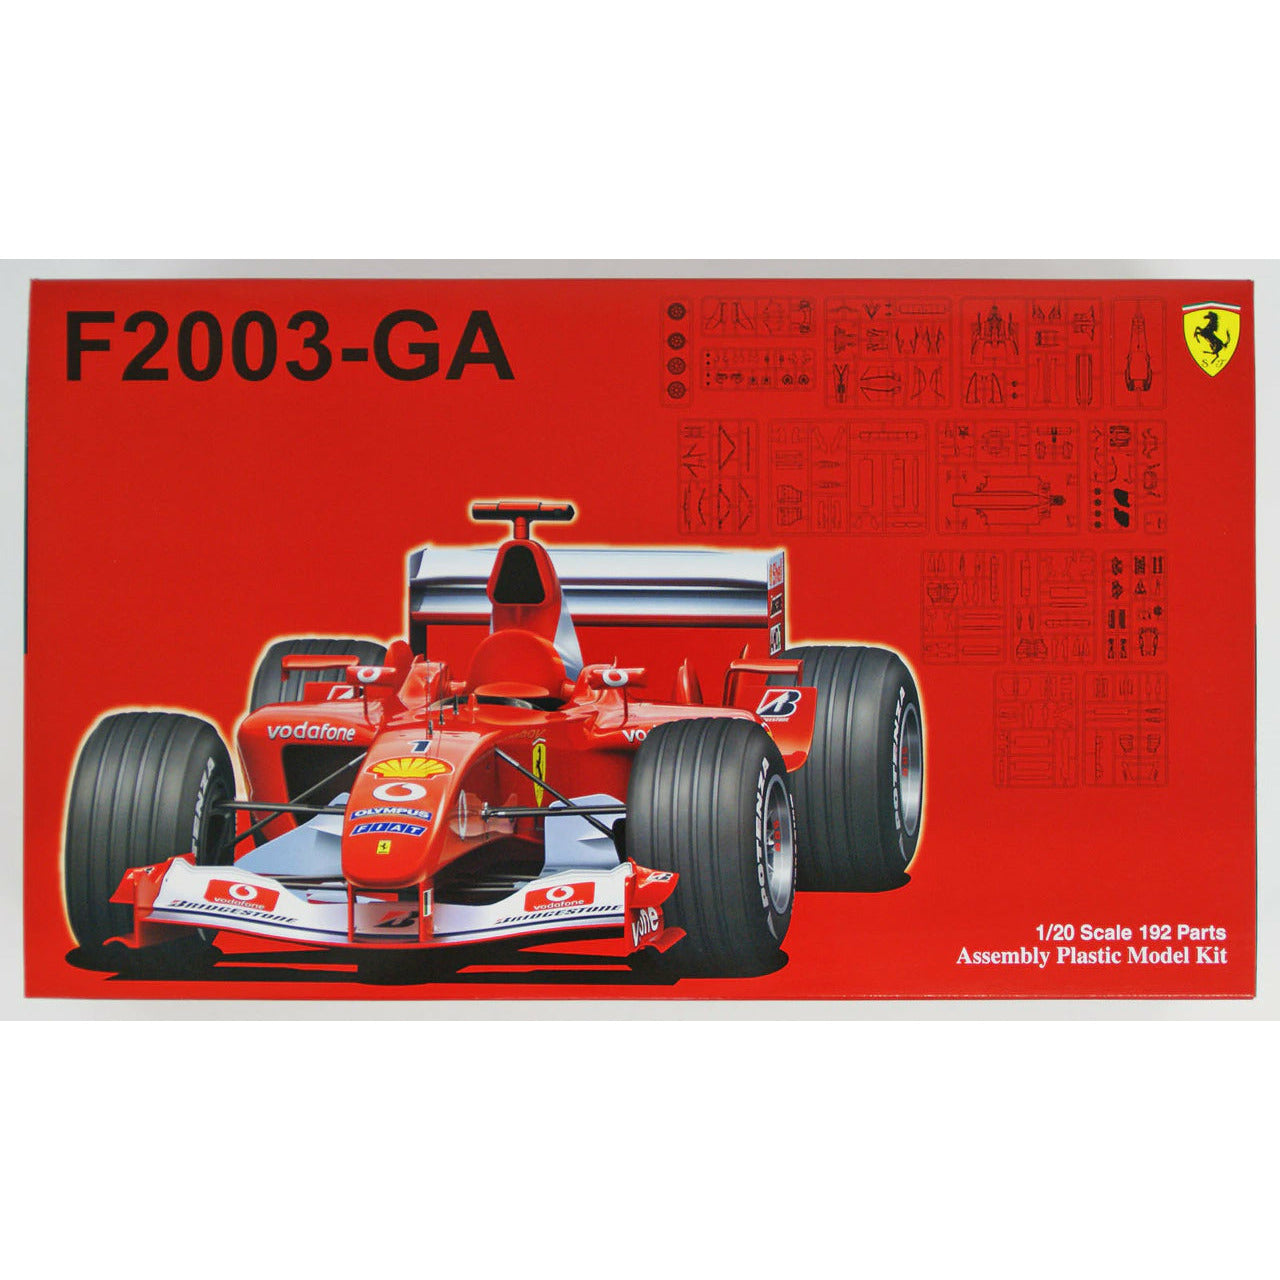 GP23 Ferrari F2003-GA (Japan, Italy, Monaco, Spainl GP) 1/20 #92096 by Fujimi